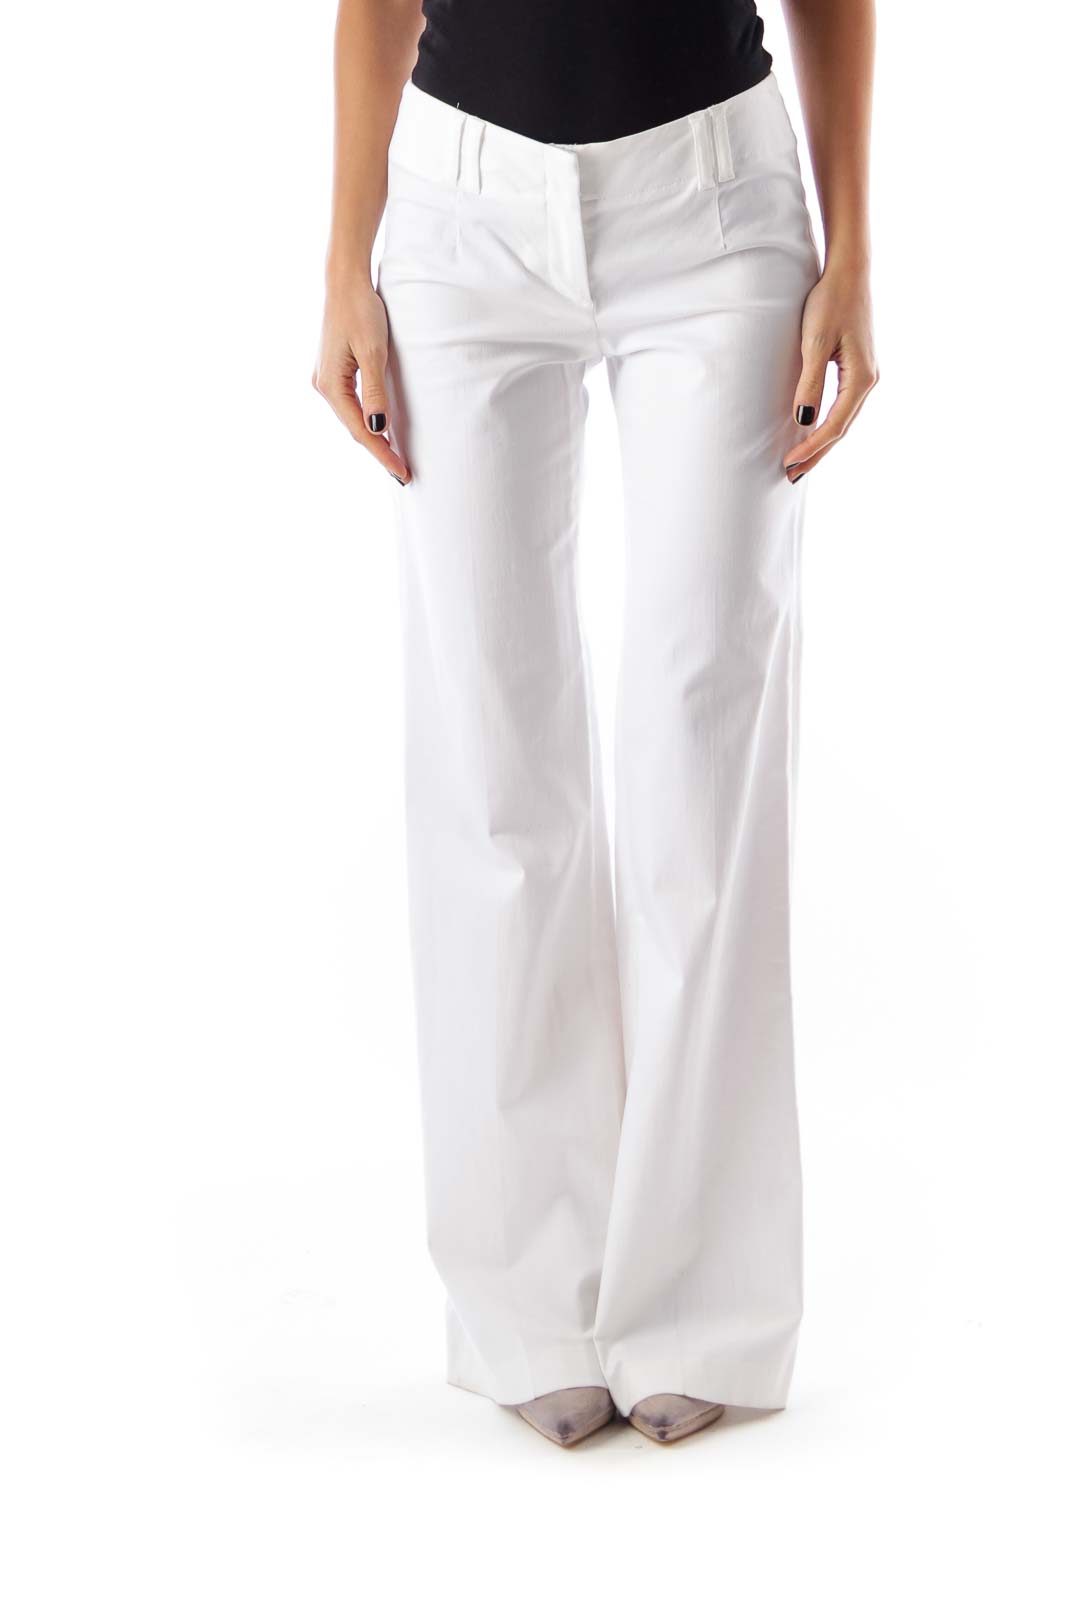 Theory - White Long Flare Pants Cotton Elastane | SilkRoll